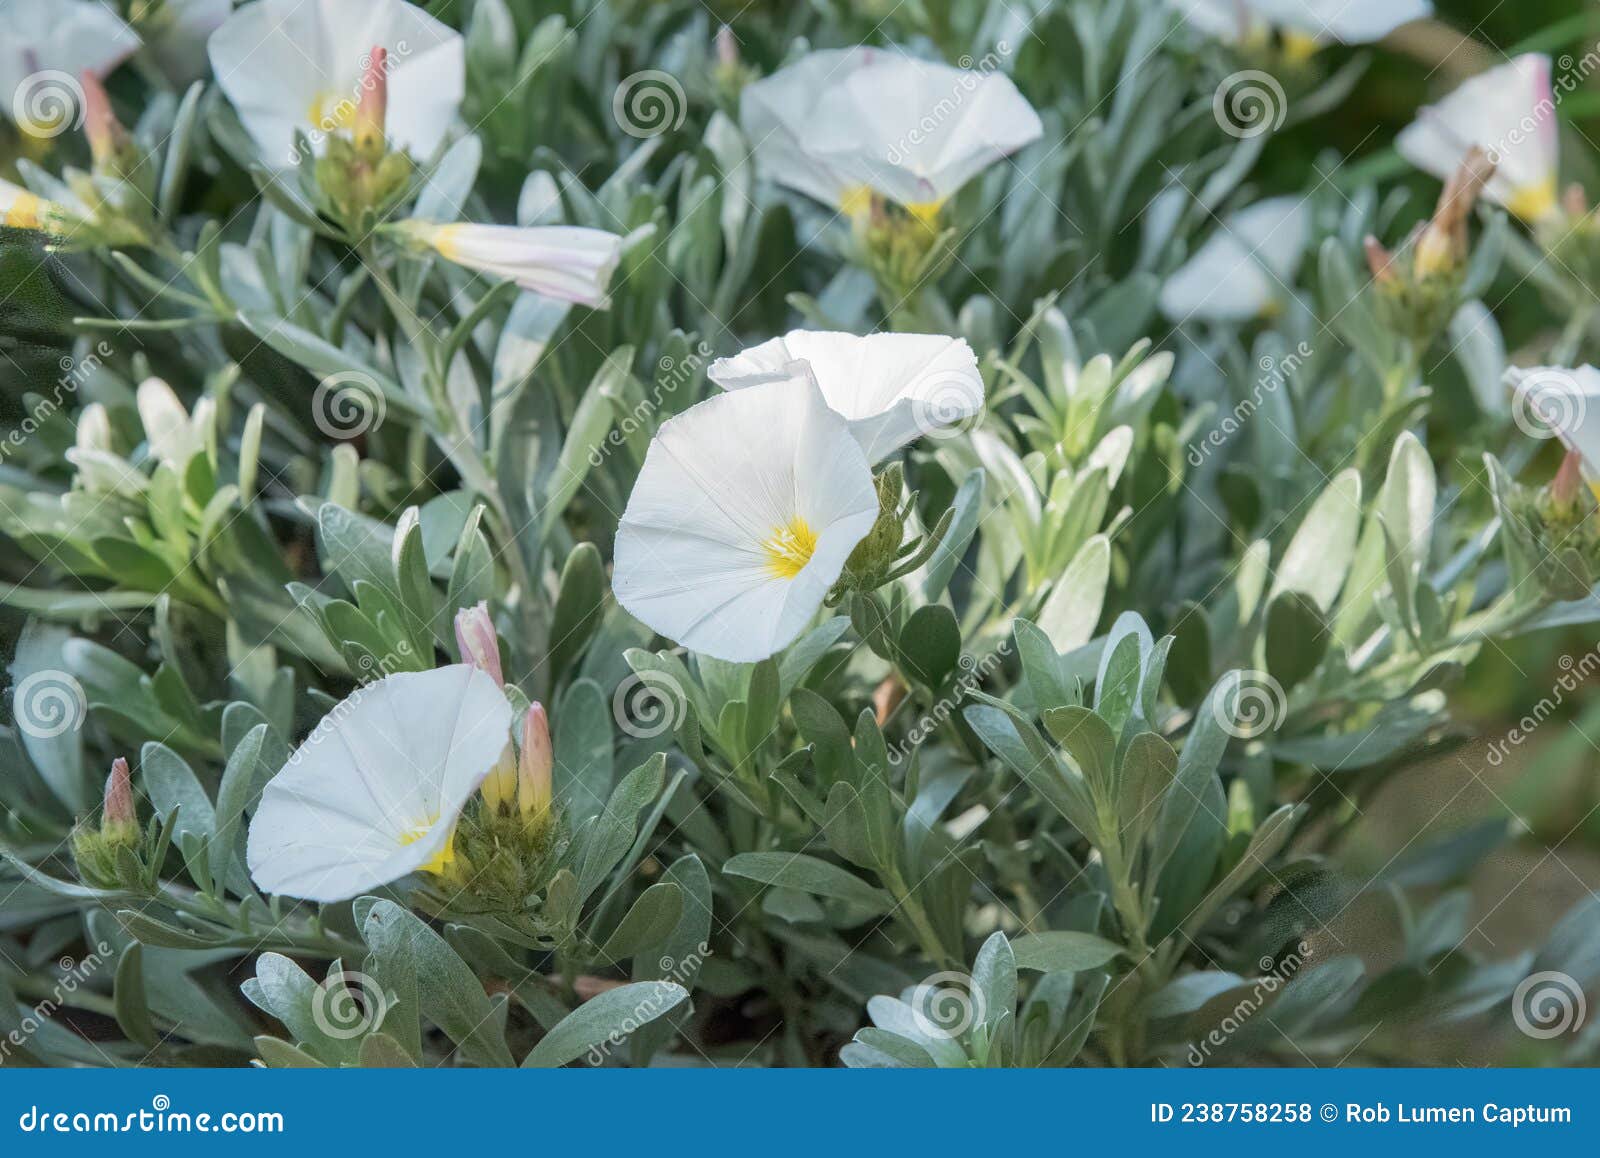 silverbush convolvulus cneorum, white flowers